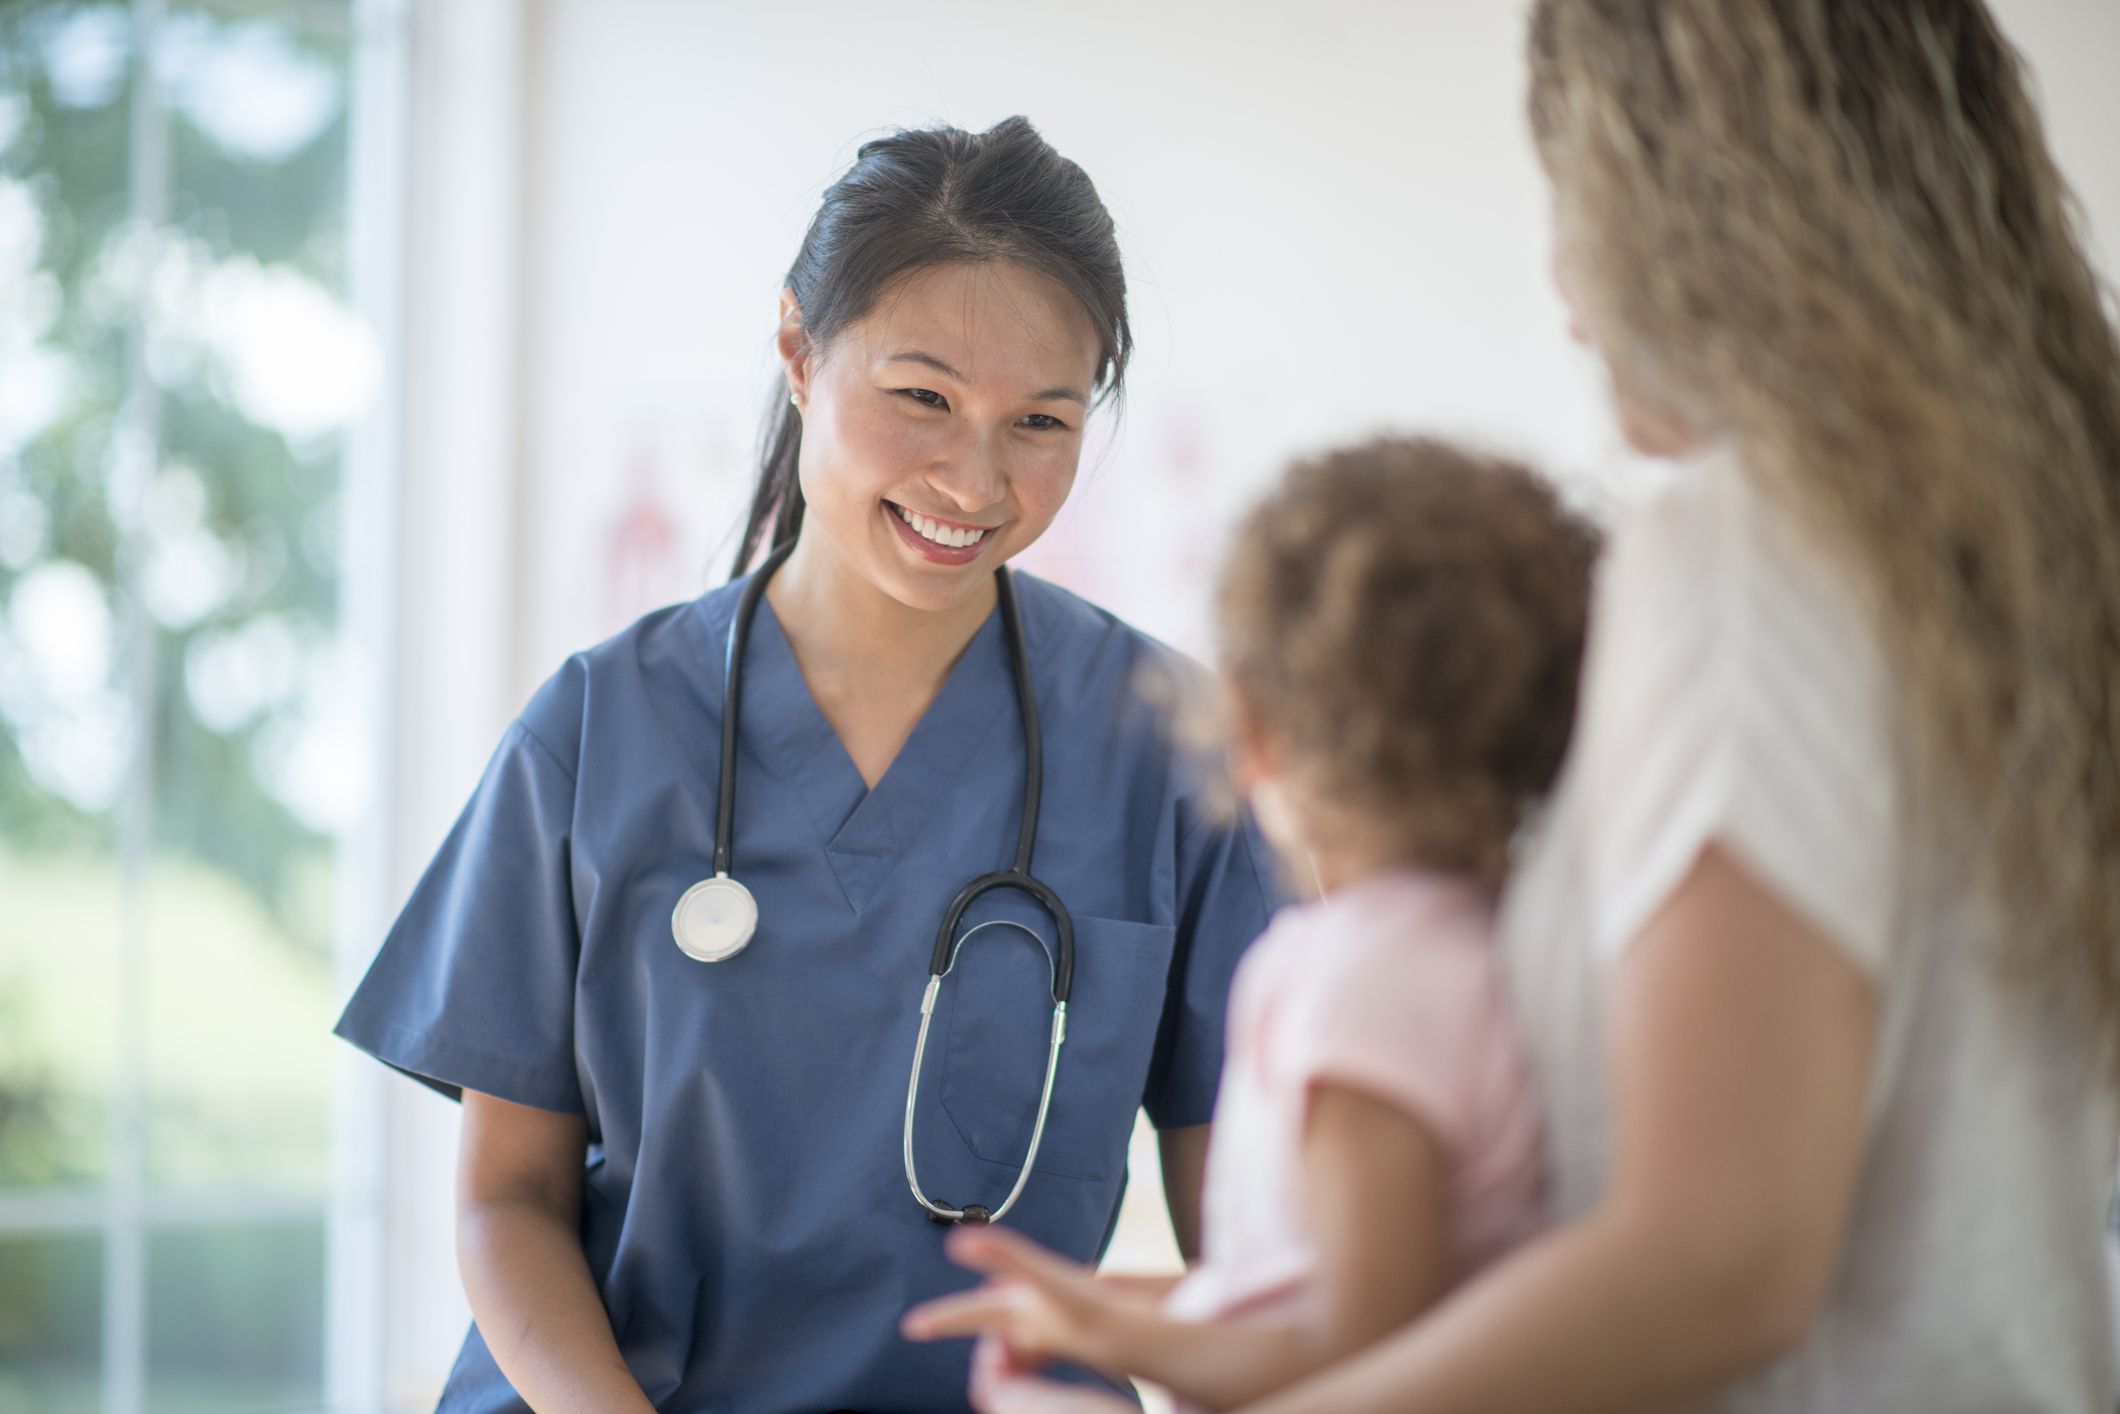 A pediatric nurse caring for a little girl